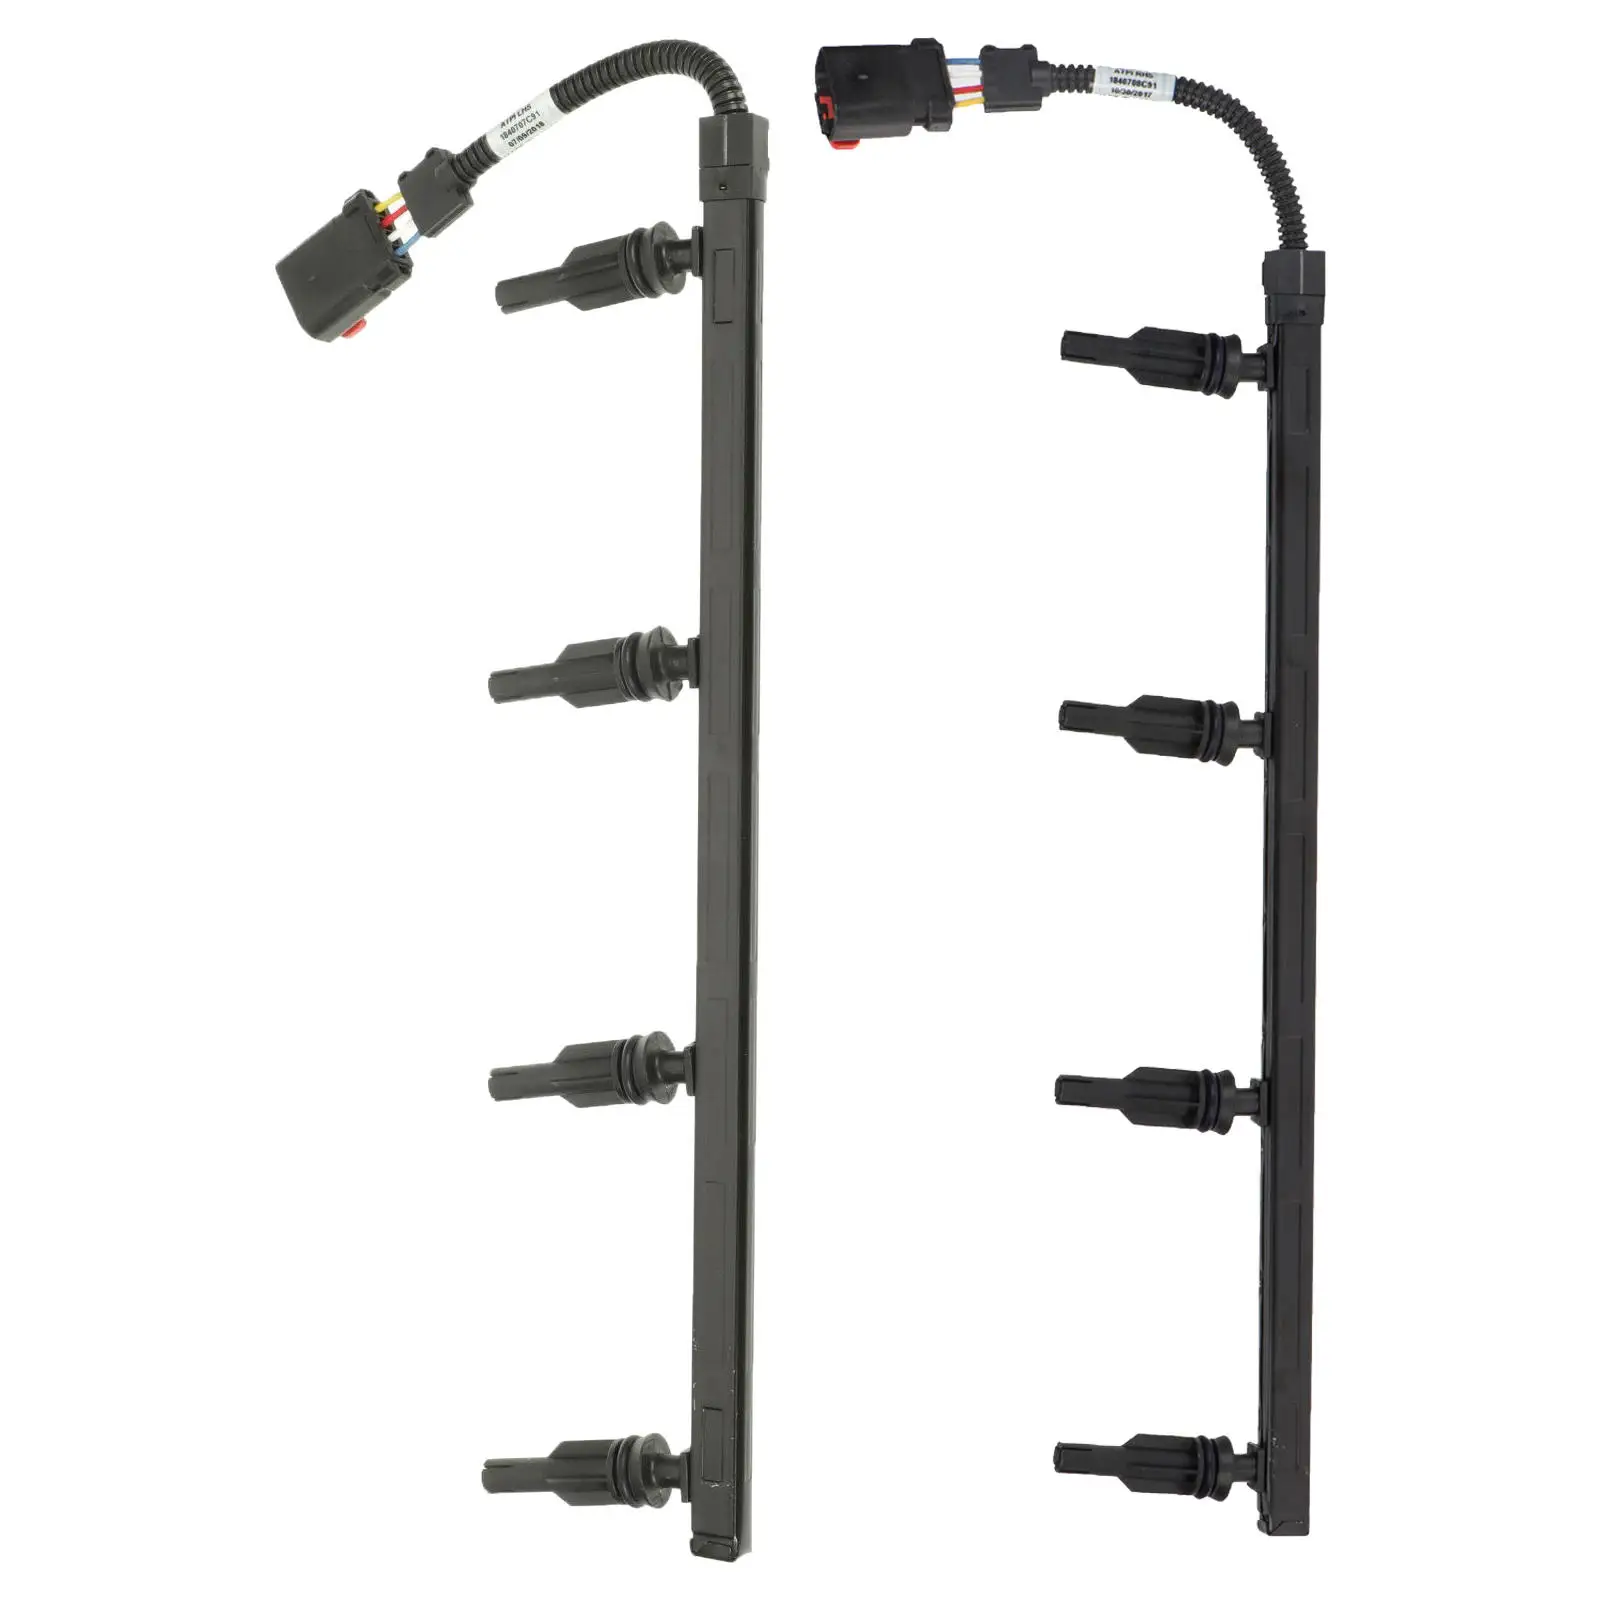 Glow Plug Wire Harness Fits for Ford 6.0L F350 F550 Super Duty Accessories Parts